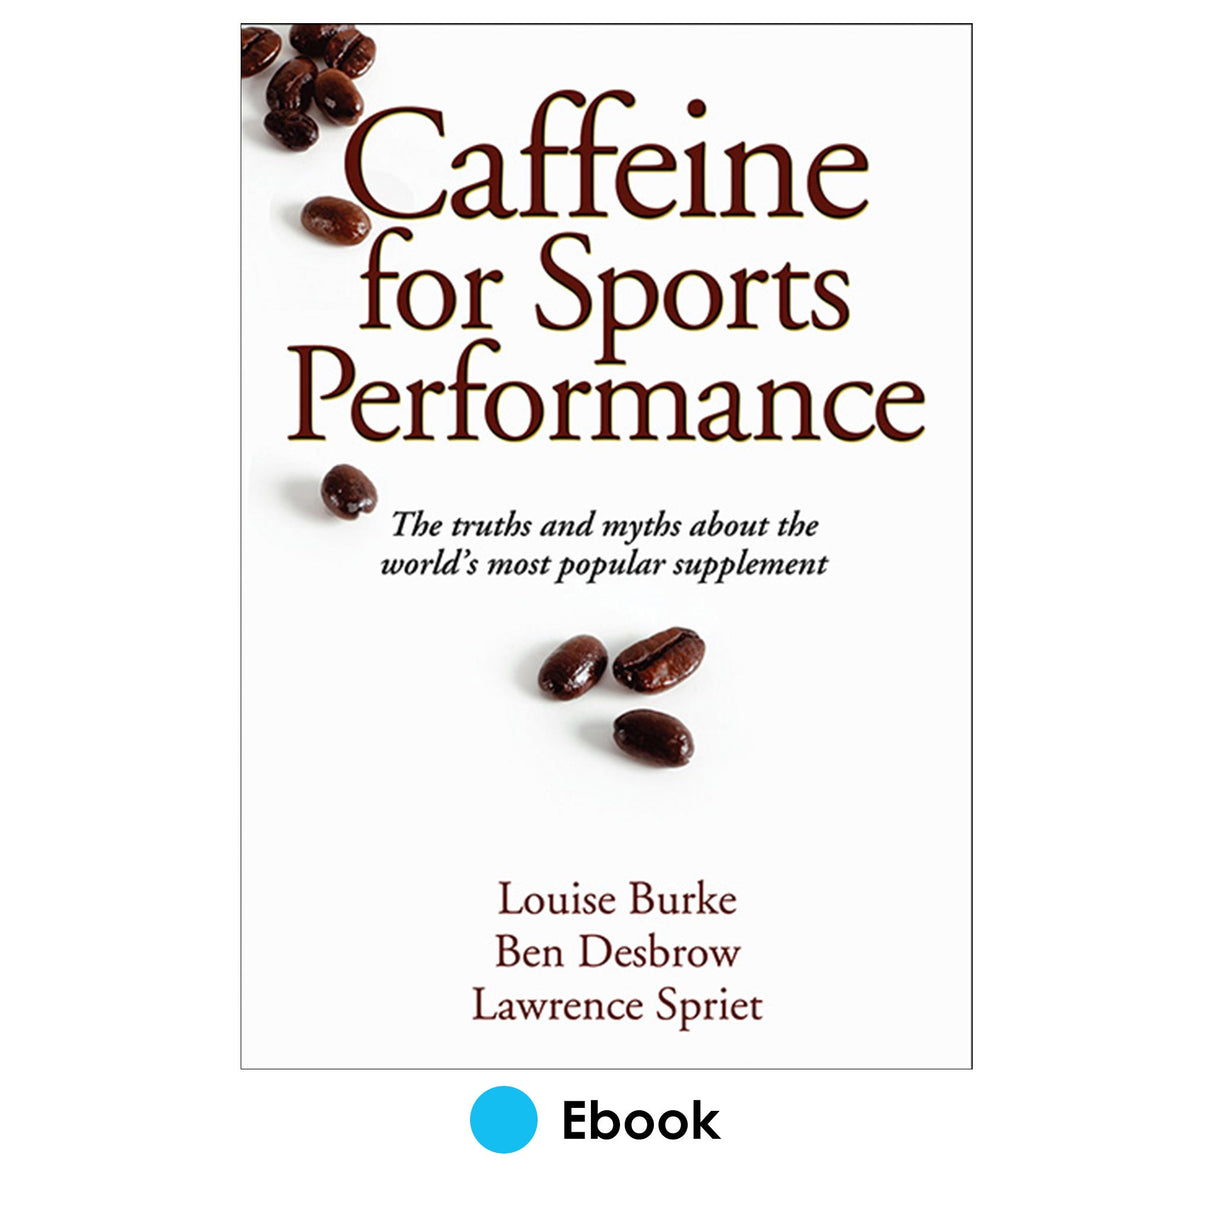 Caffeine for Sports Performance PDF